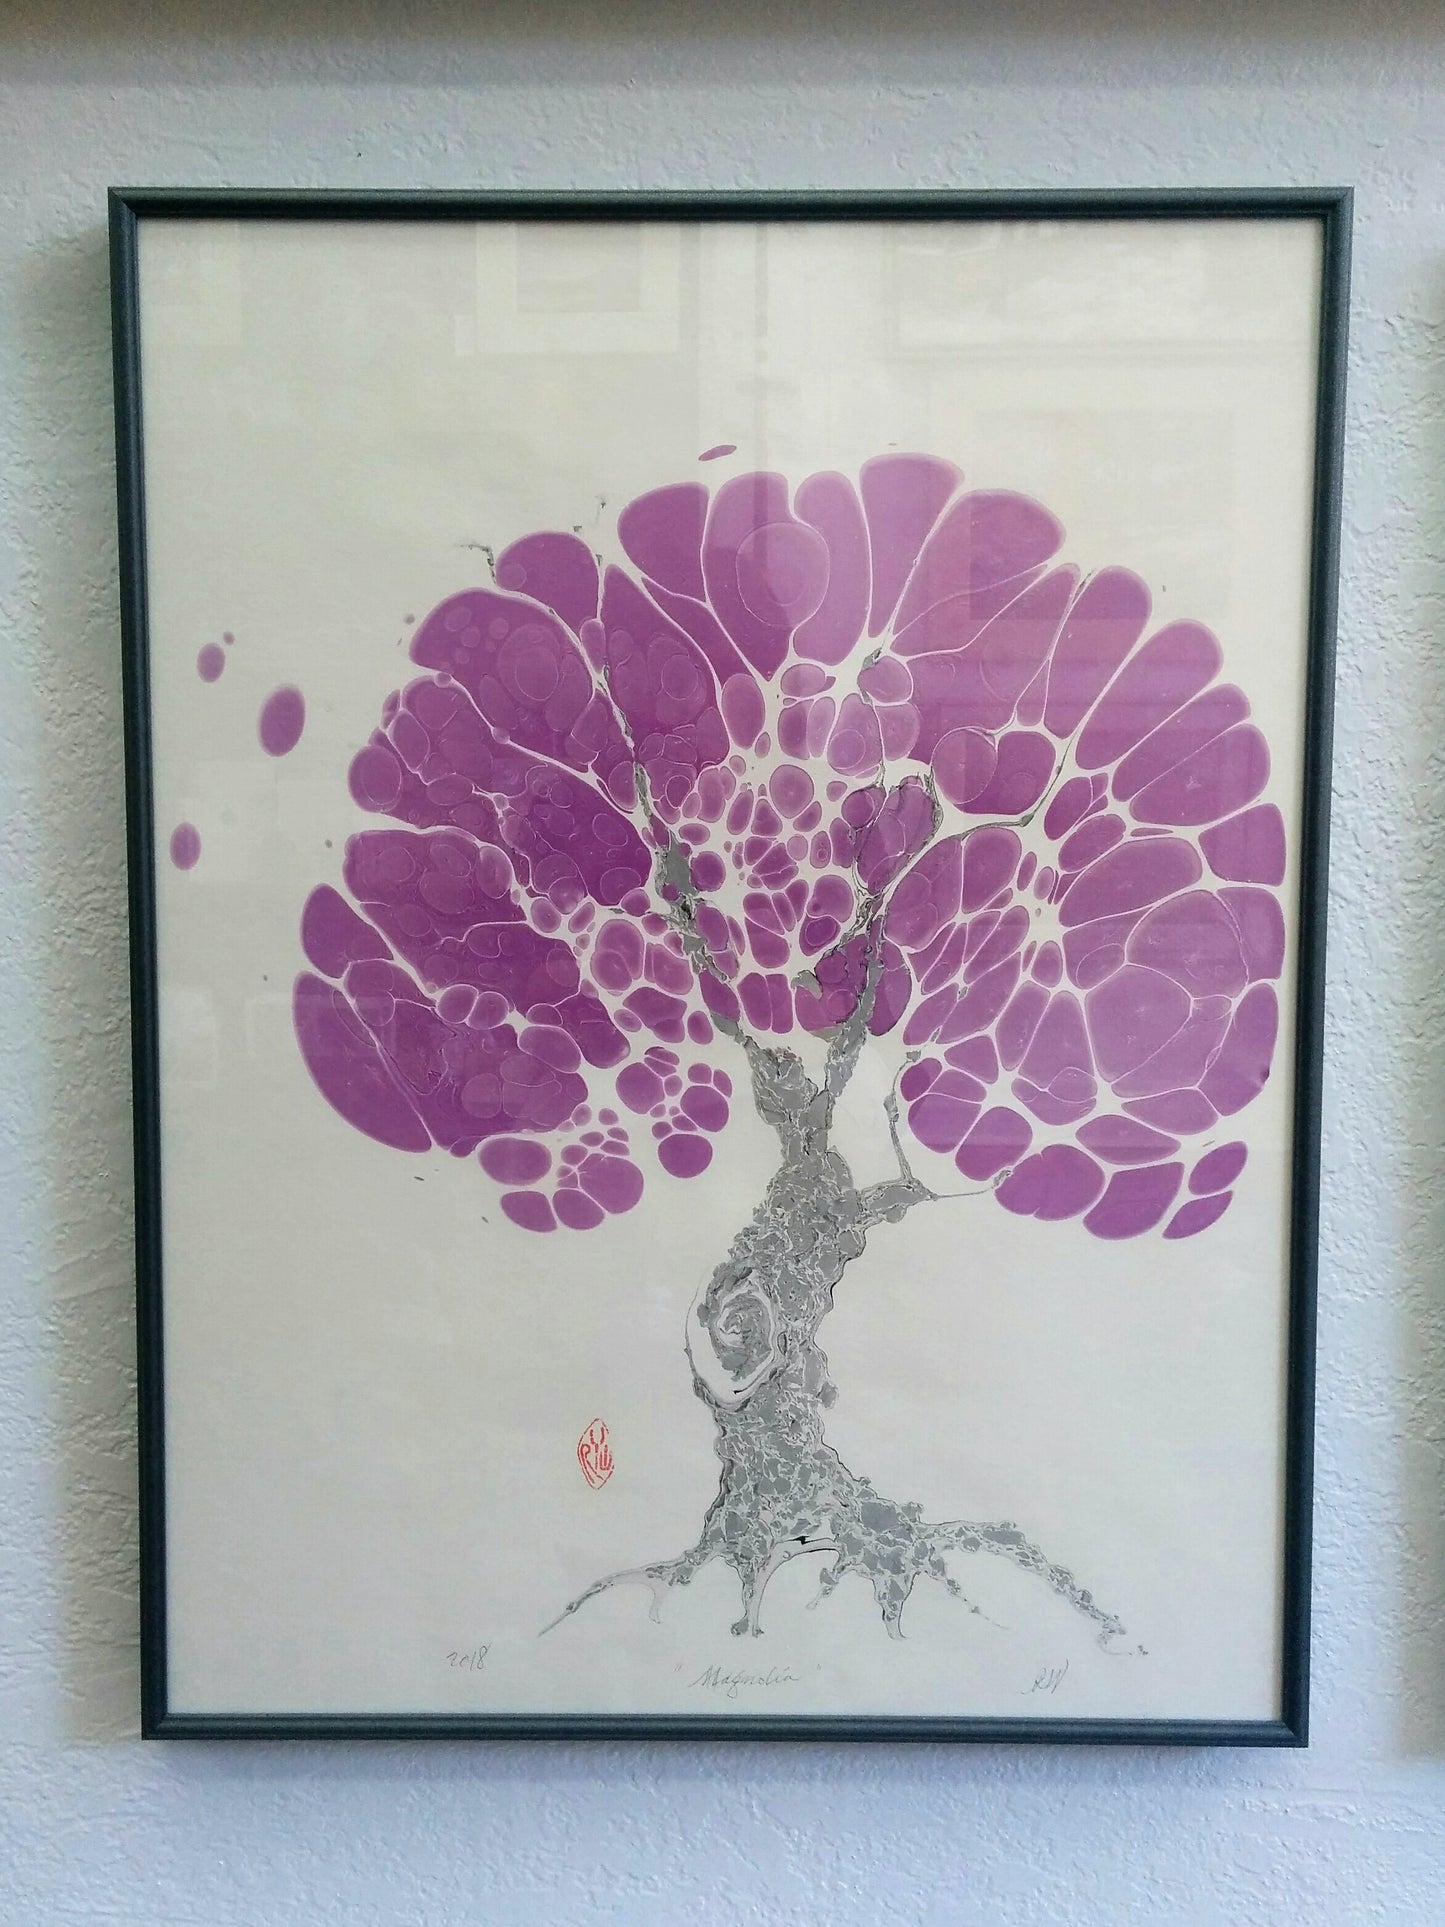 Framed Marbled Graphic - "Magnolia"